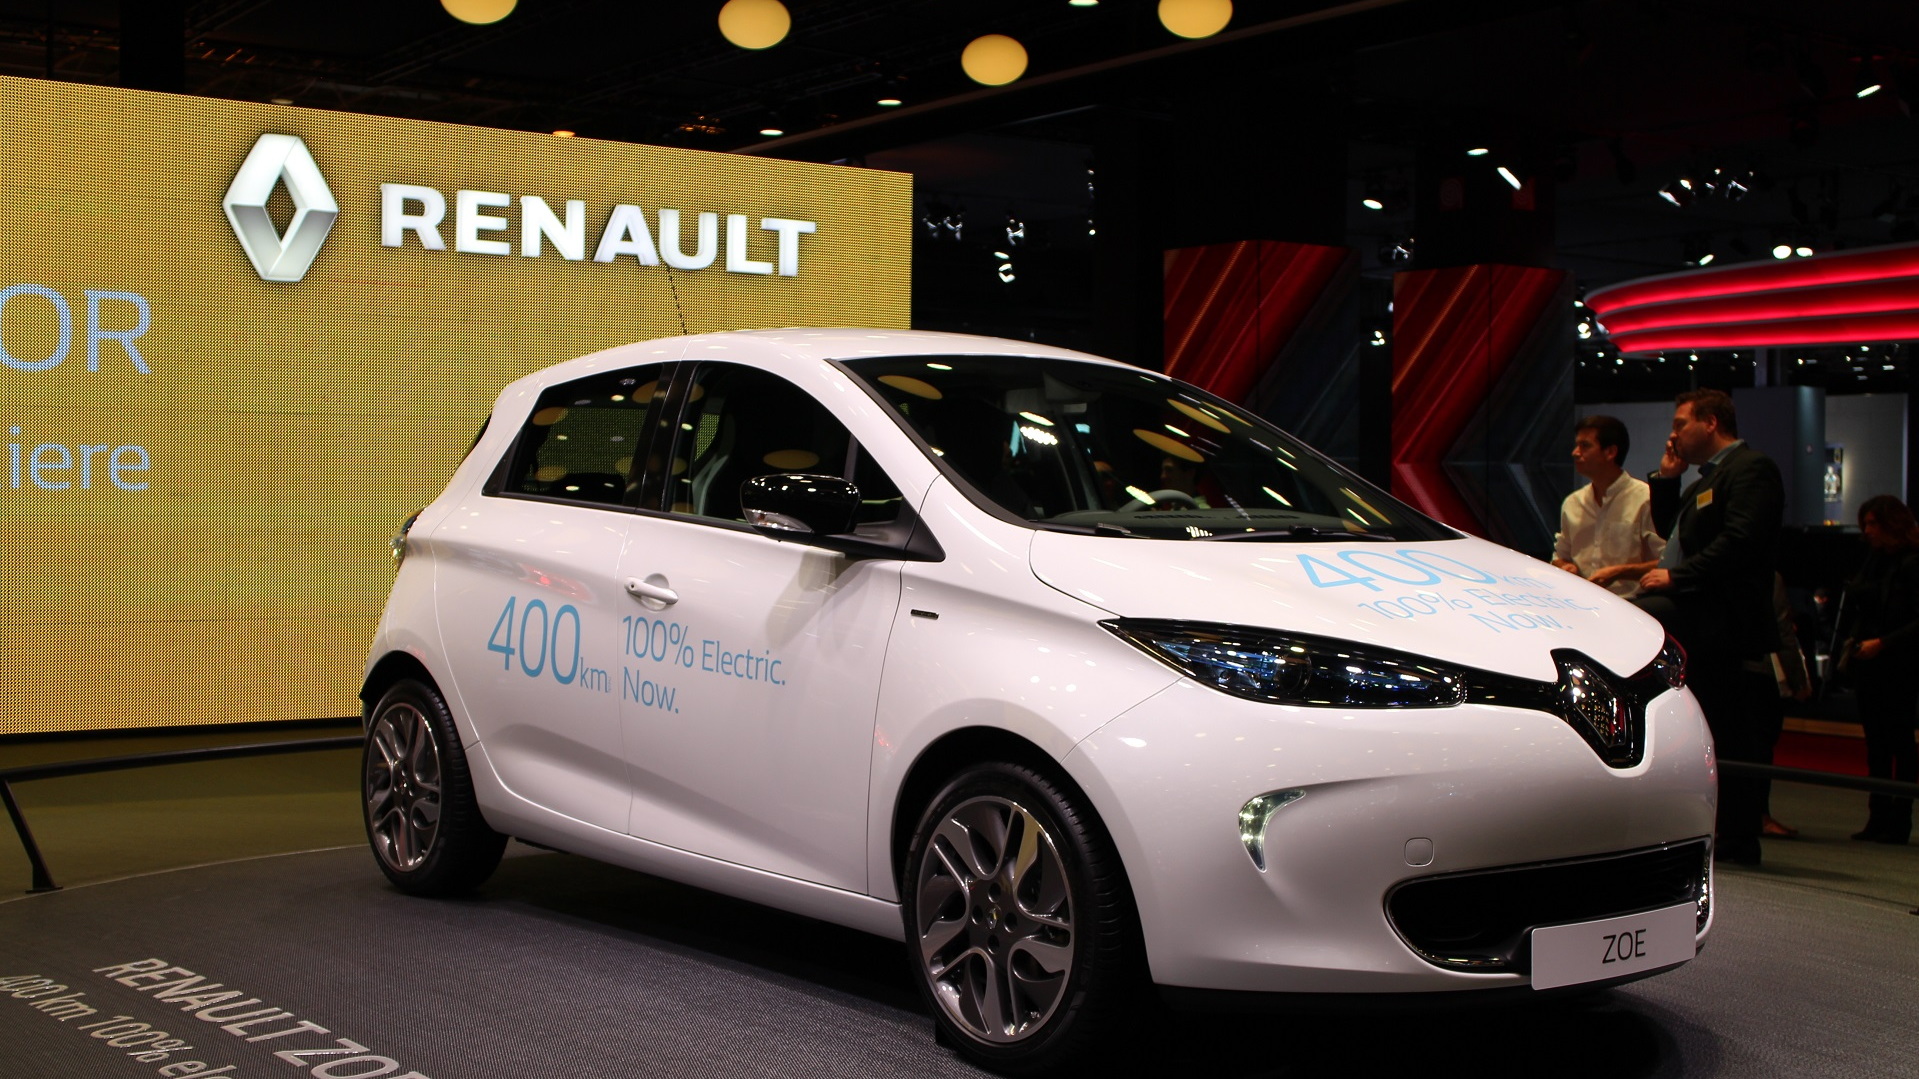 Longer-range Renault Zoe electric car, introduced at 2016 Paris Motor Show